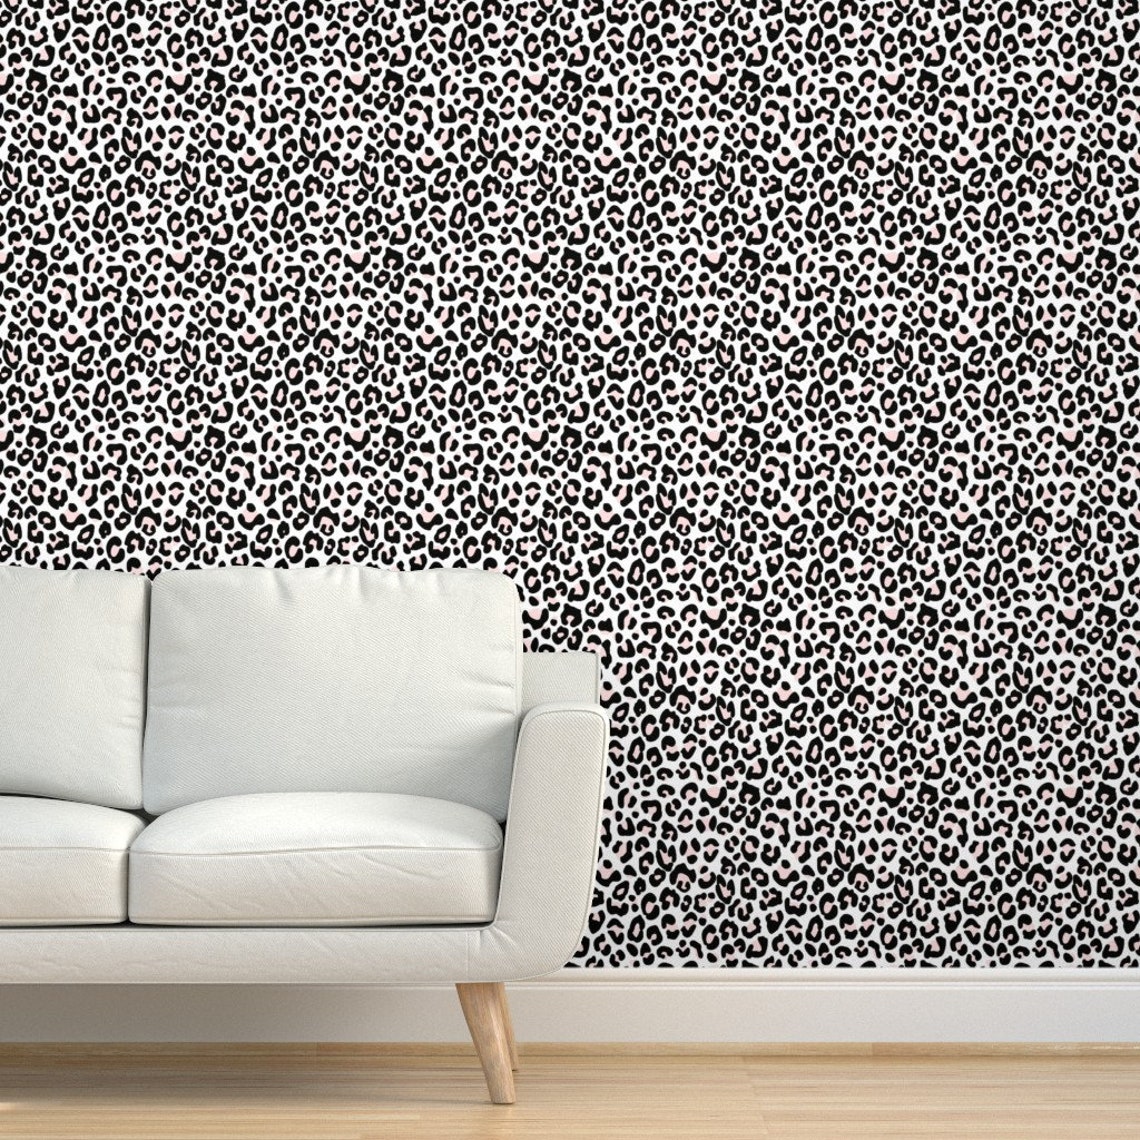 Animal Print Wallpaper White Pink Leopard Cheetah by | Etsy